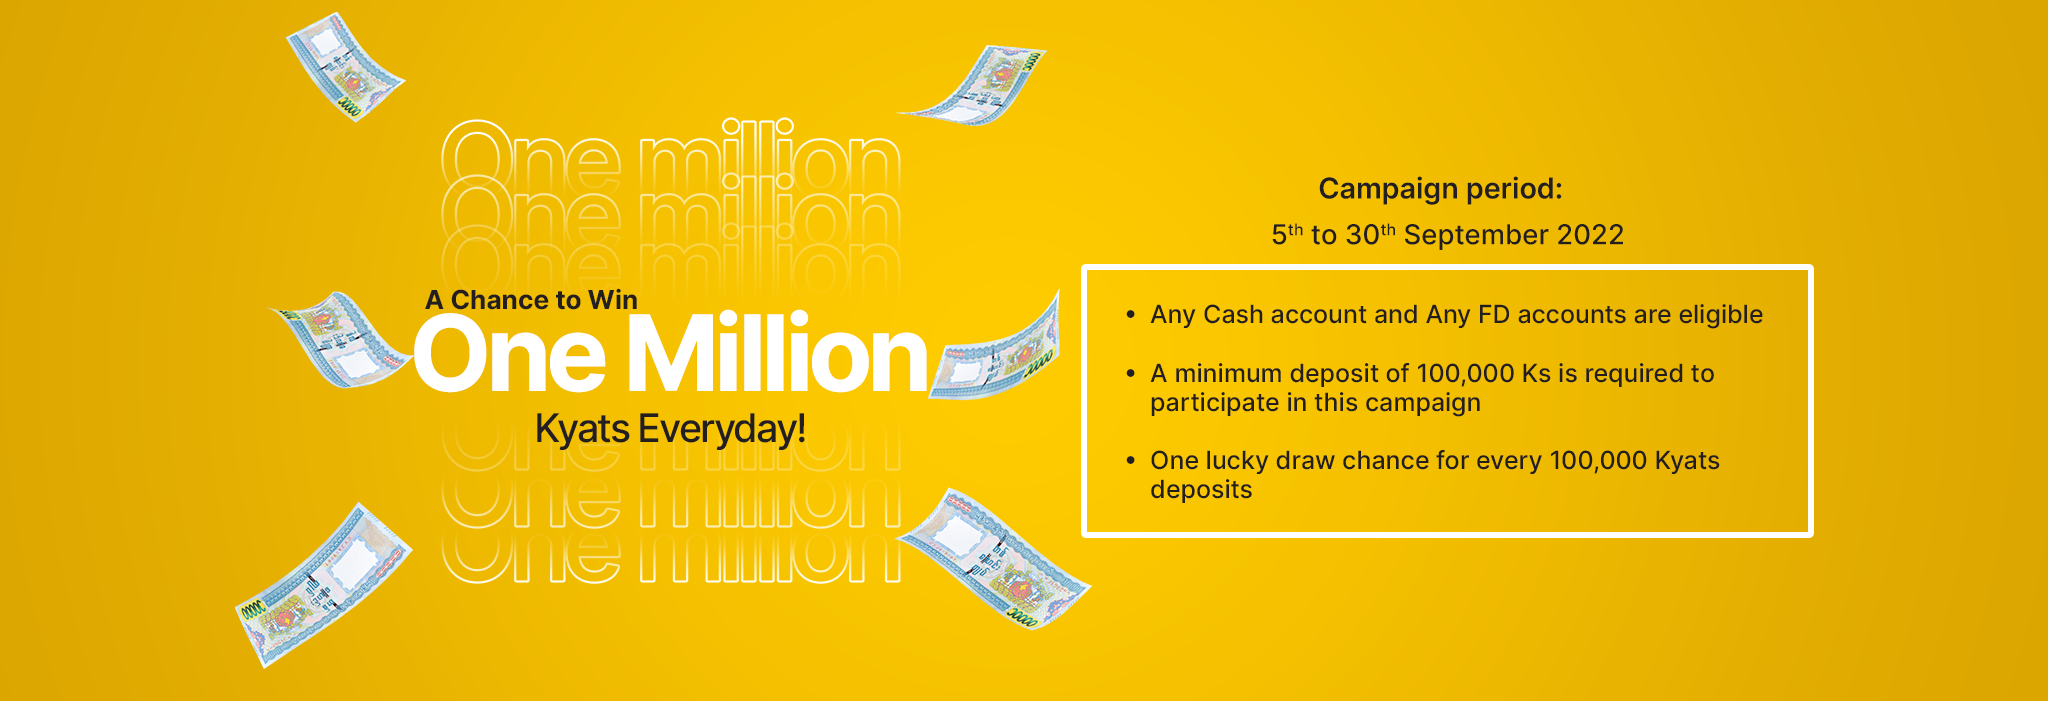 KBZ Bank A Chance to Win One Million Kyats Everyday